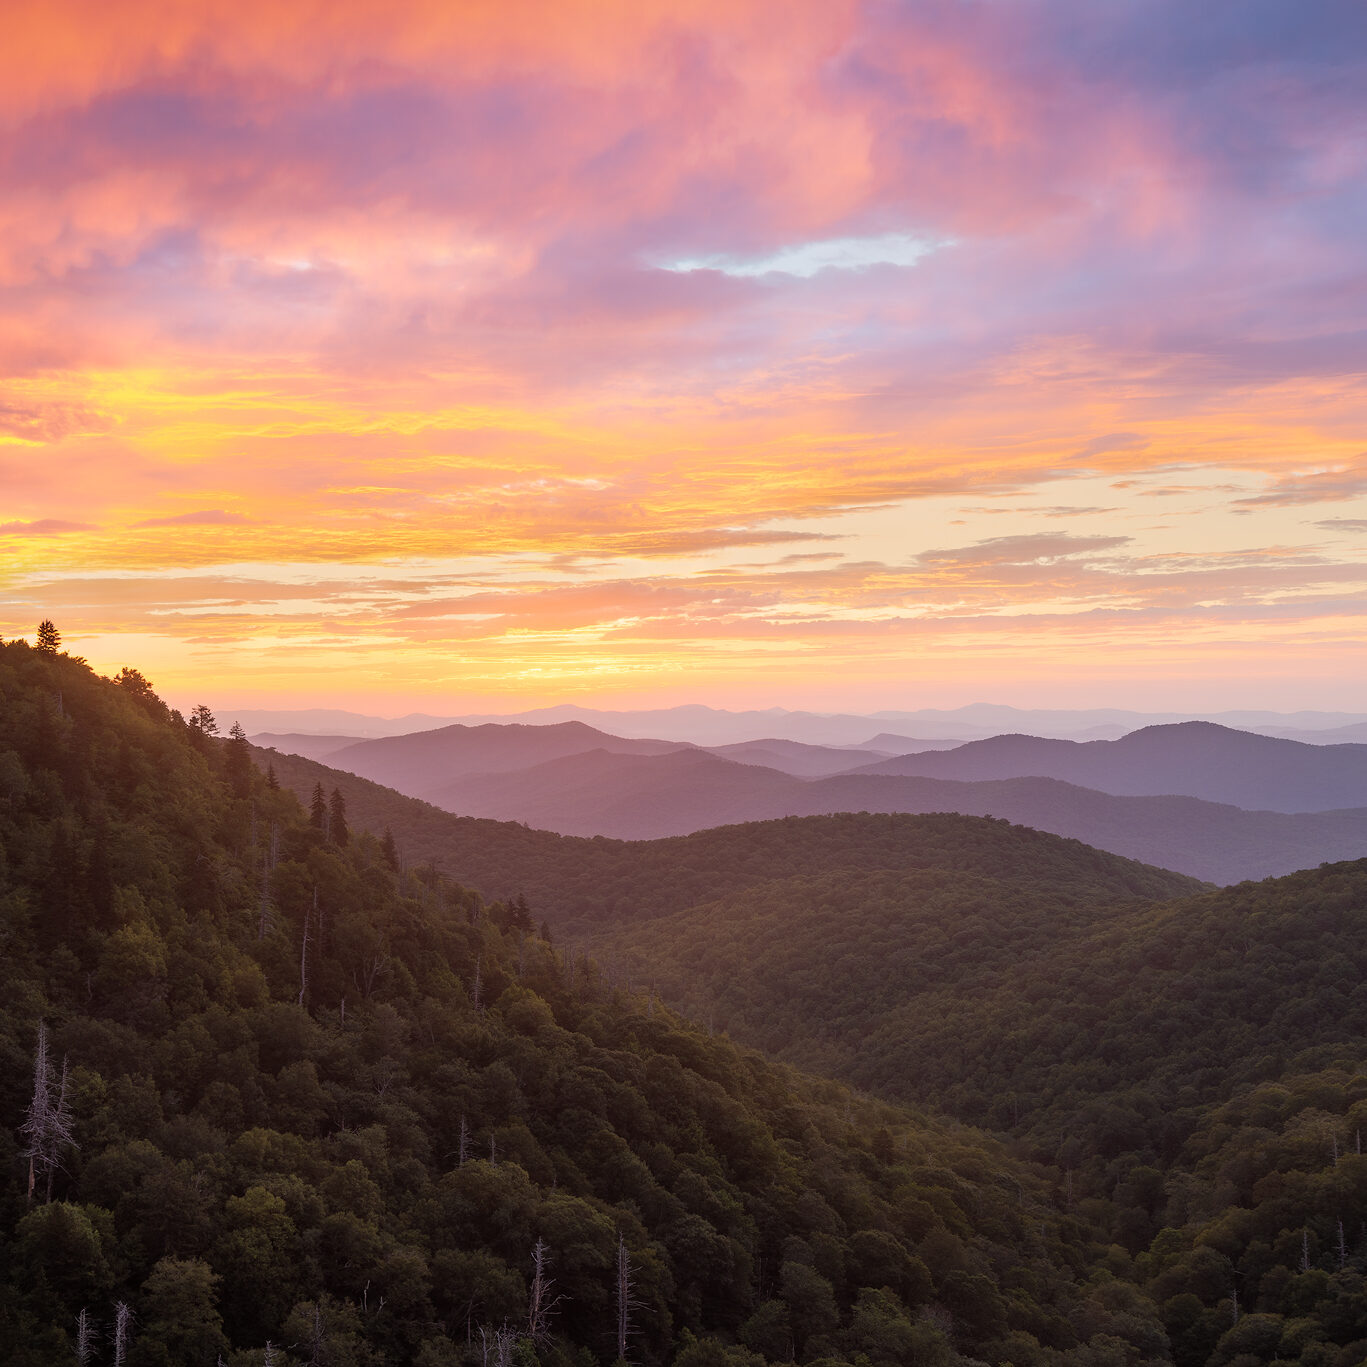 I fiery sunrise above the mountains of Southern Appalachia near Graveyard Fields and Asheville, North Carolina